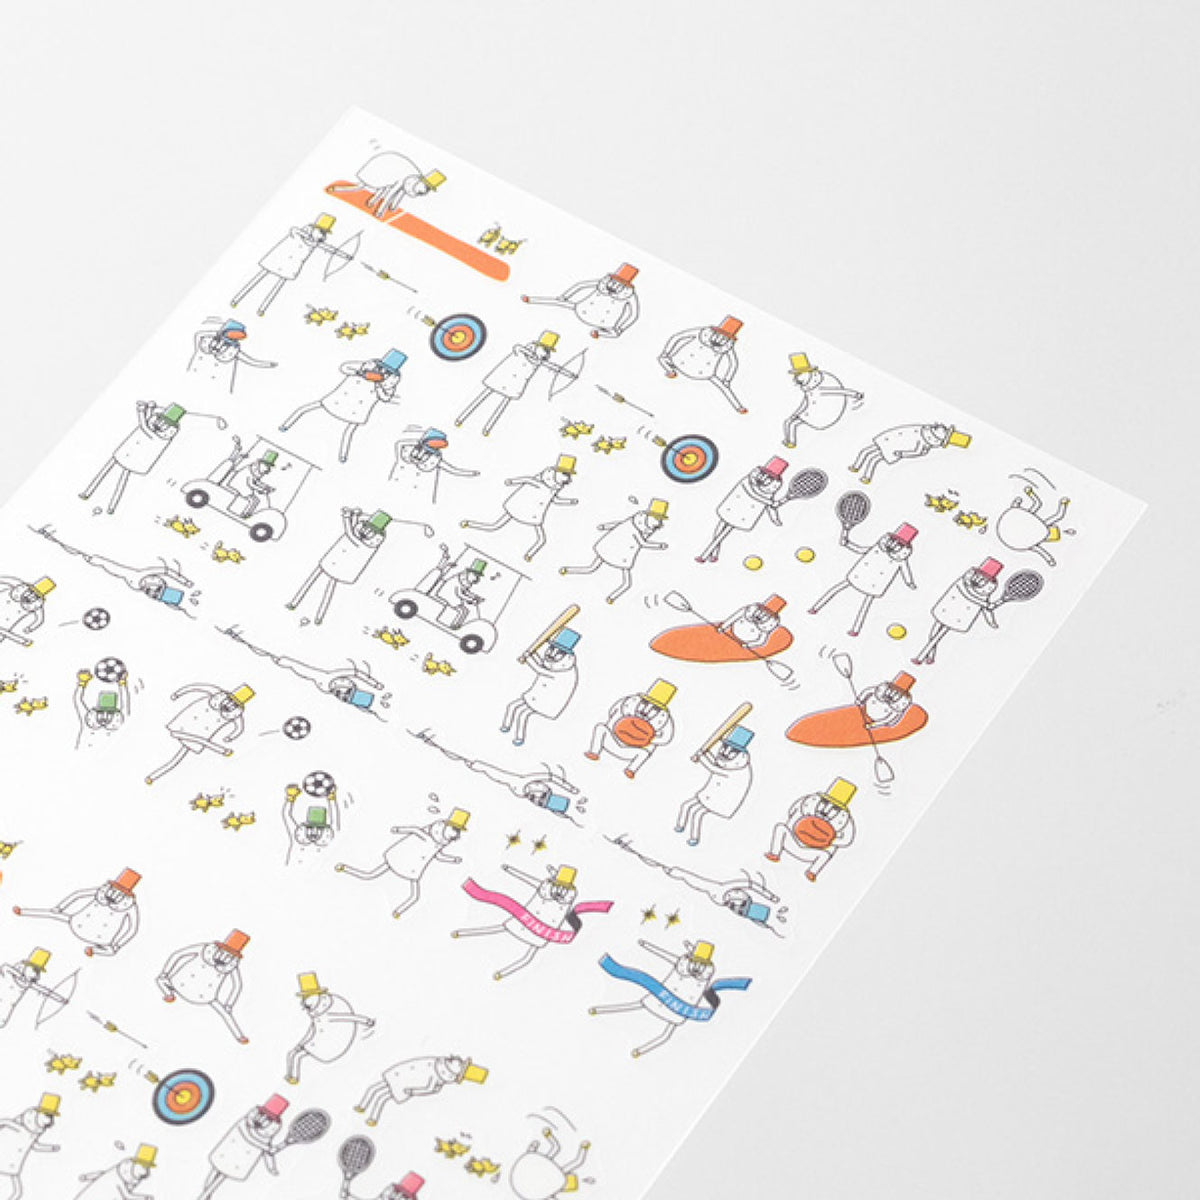 Midori - Planner Sticker - Seal Collection - Sports